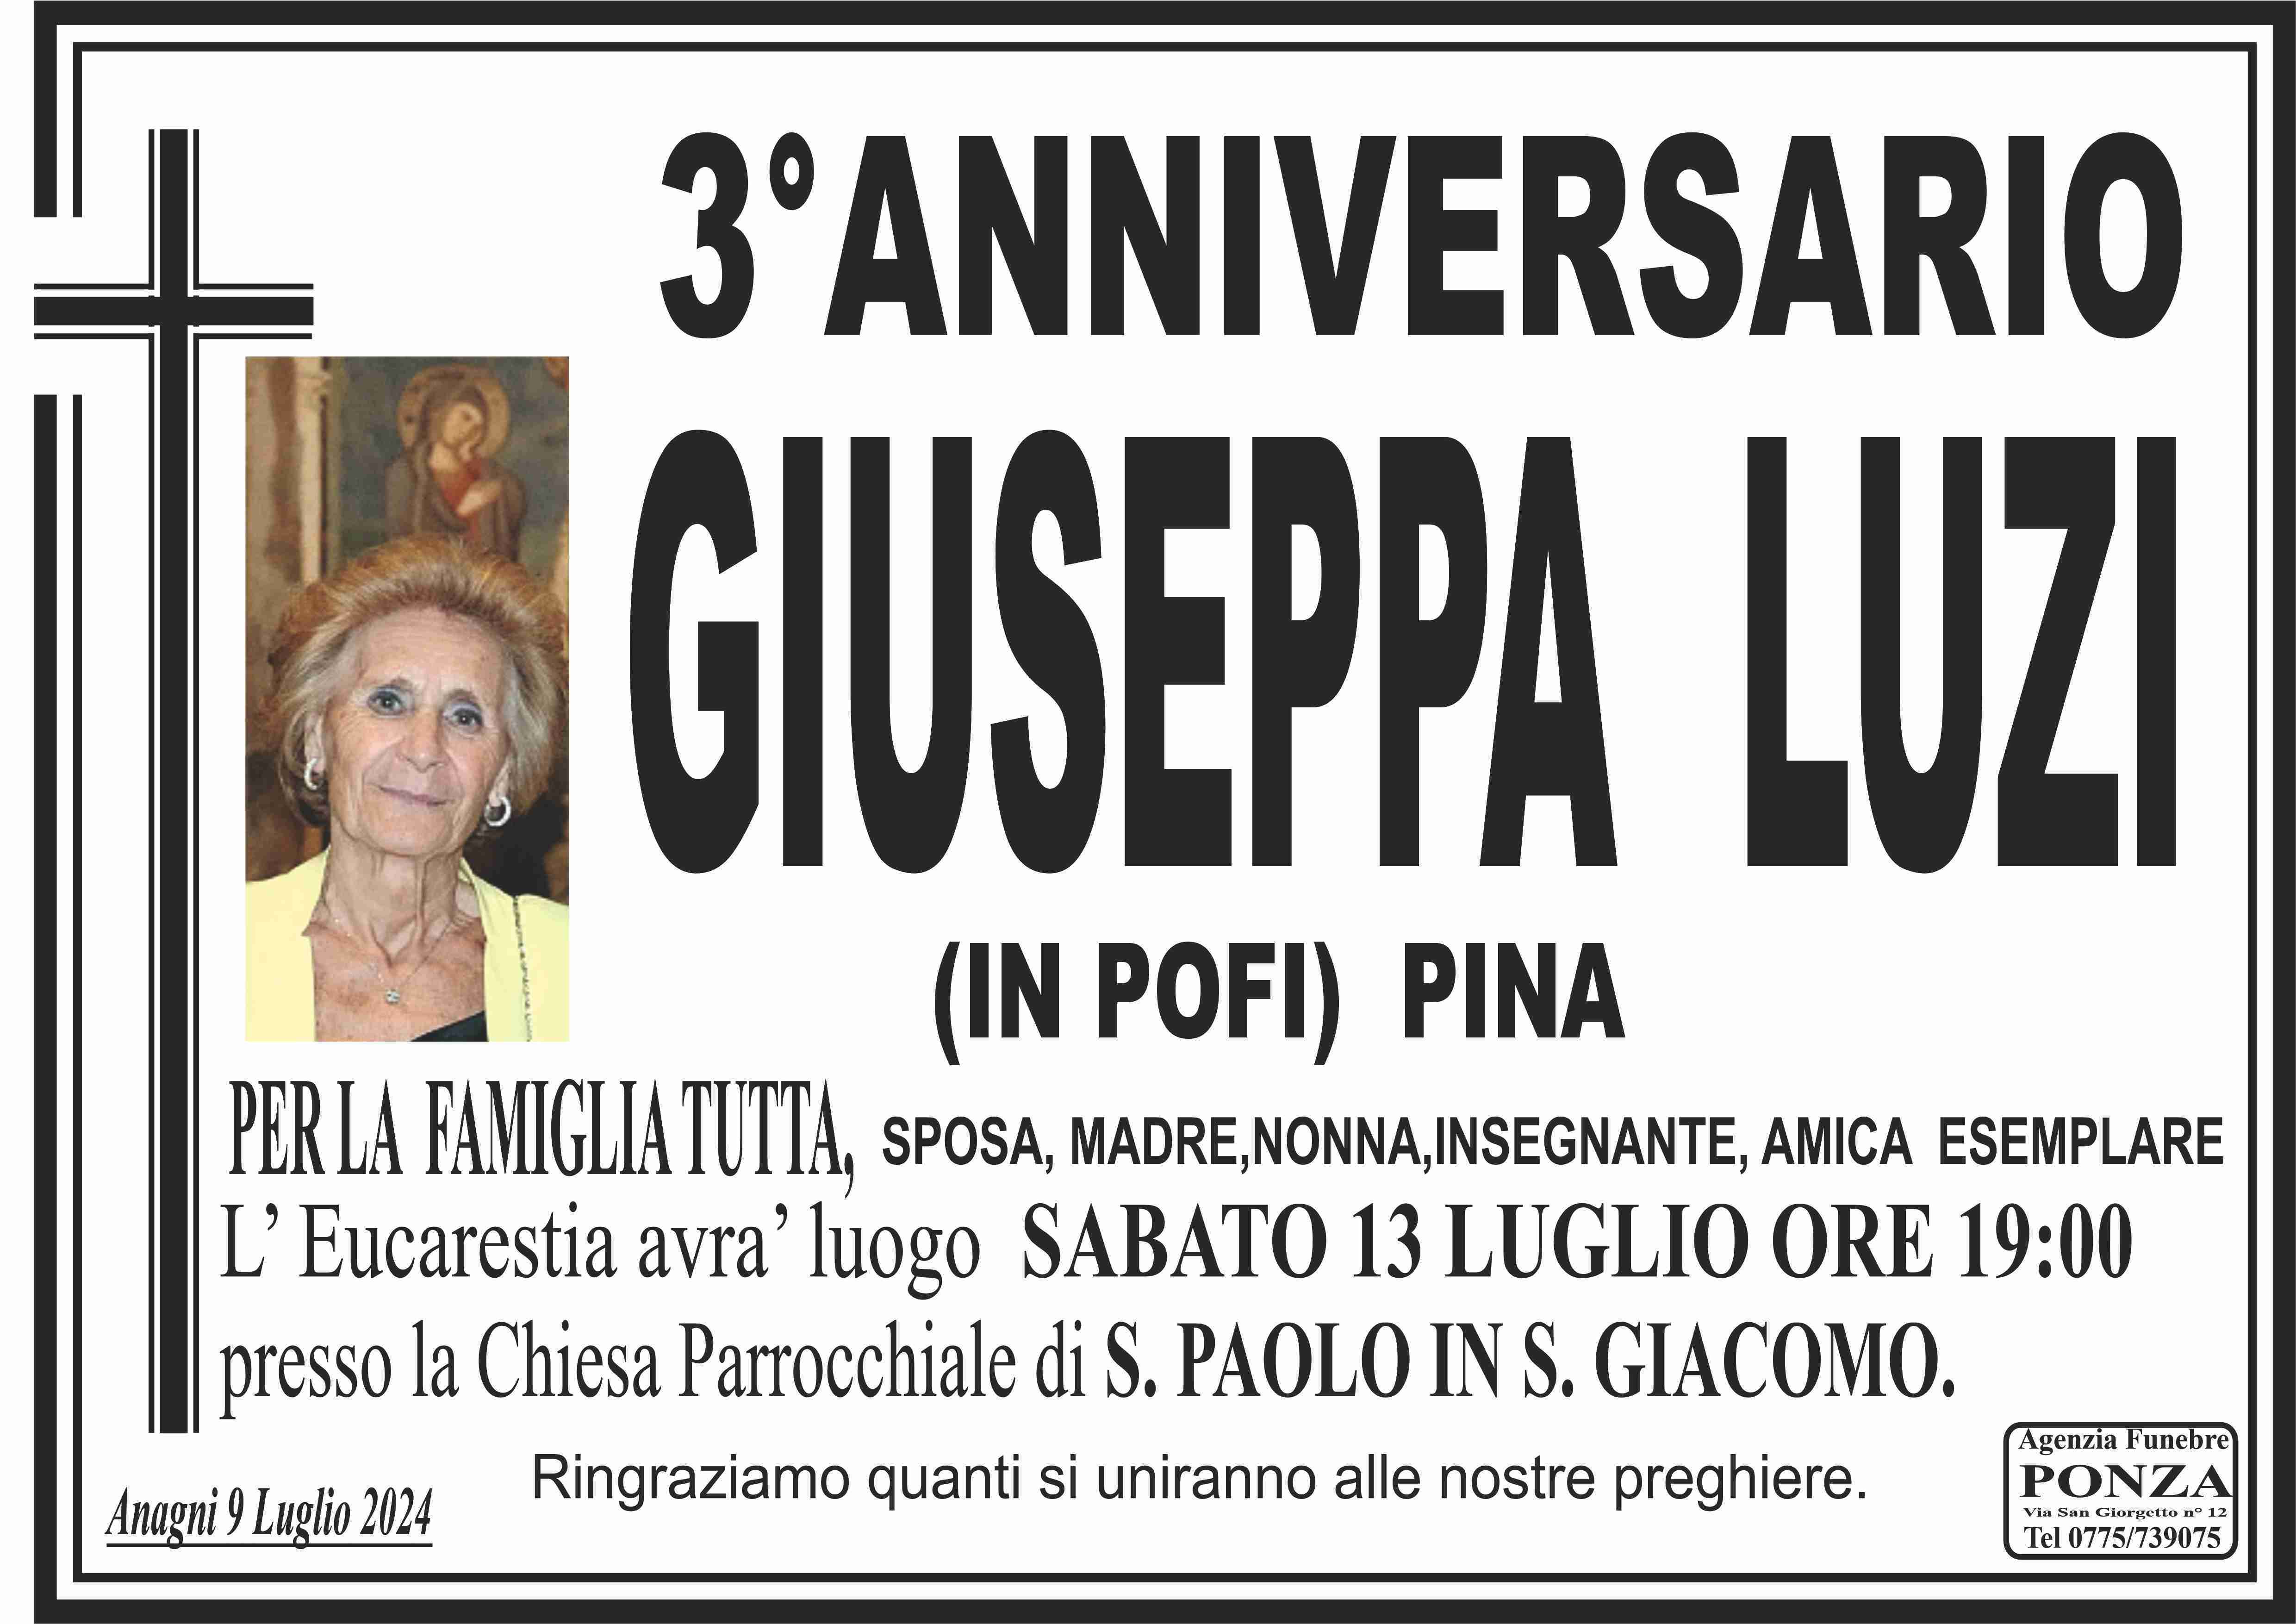 Giuseppa Luzi